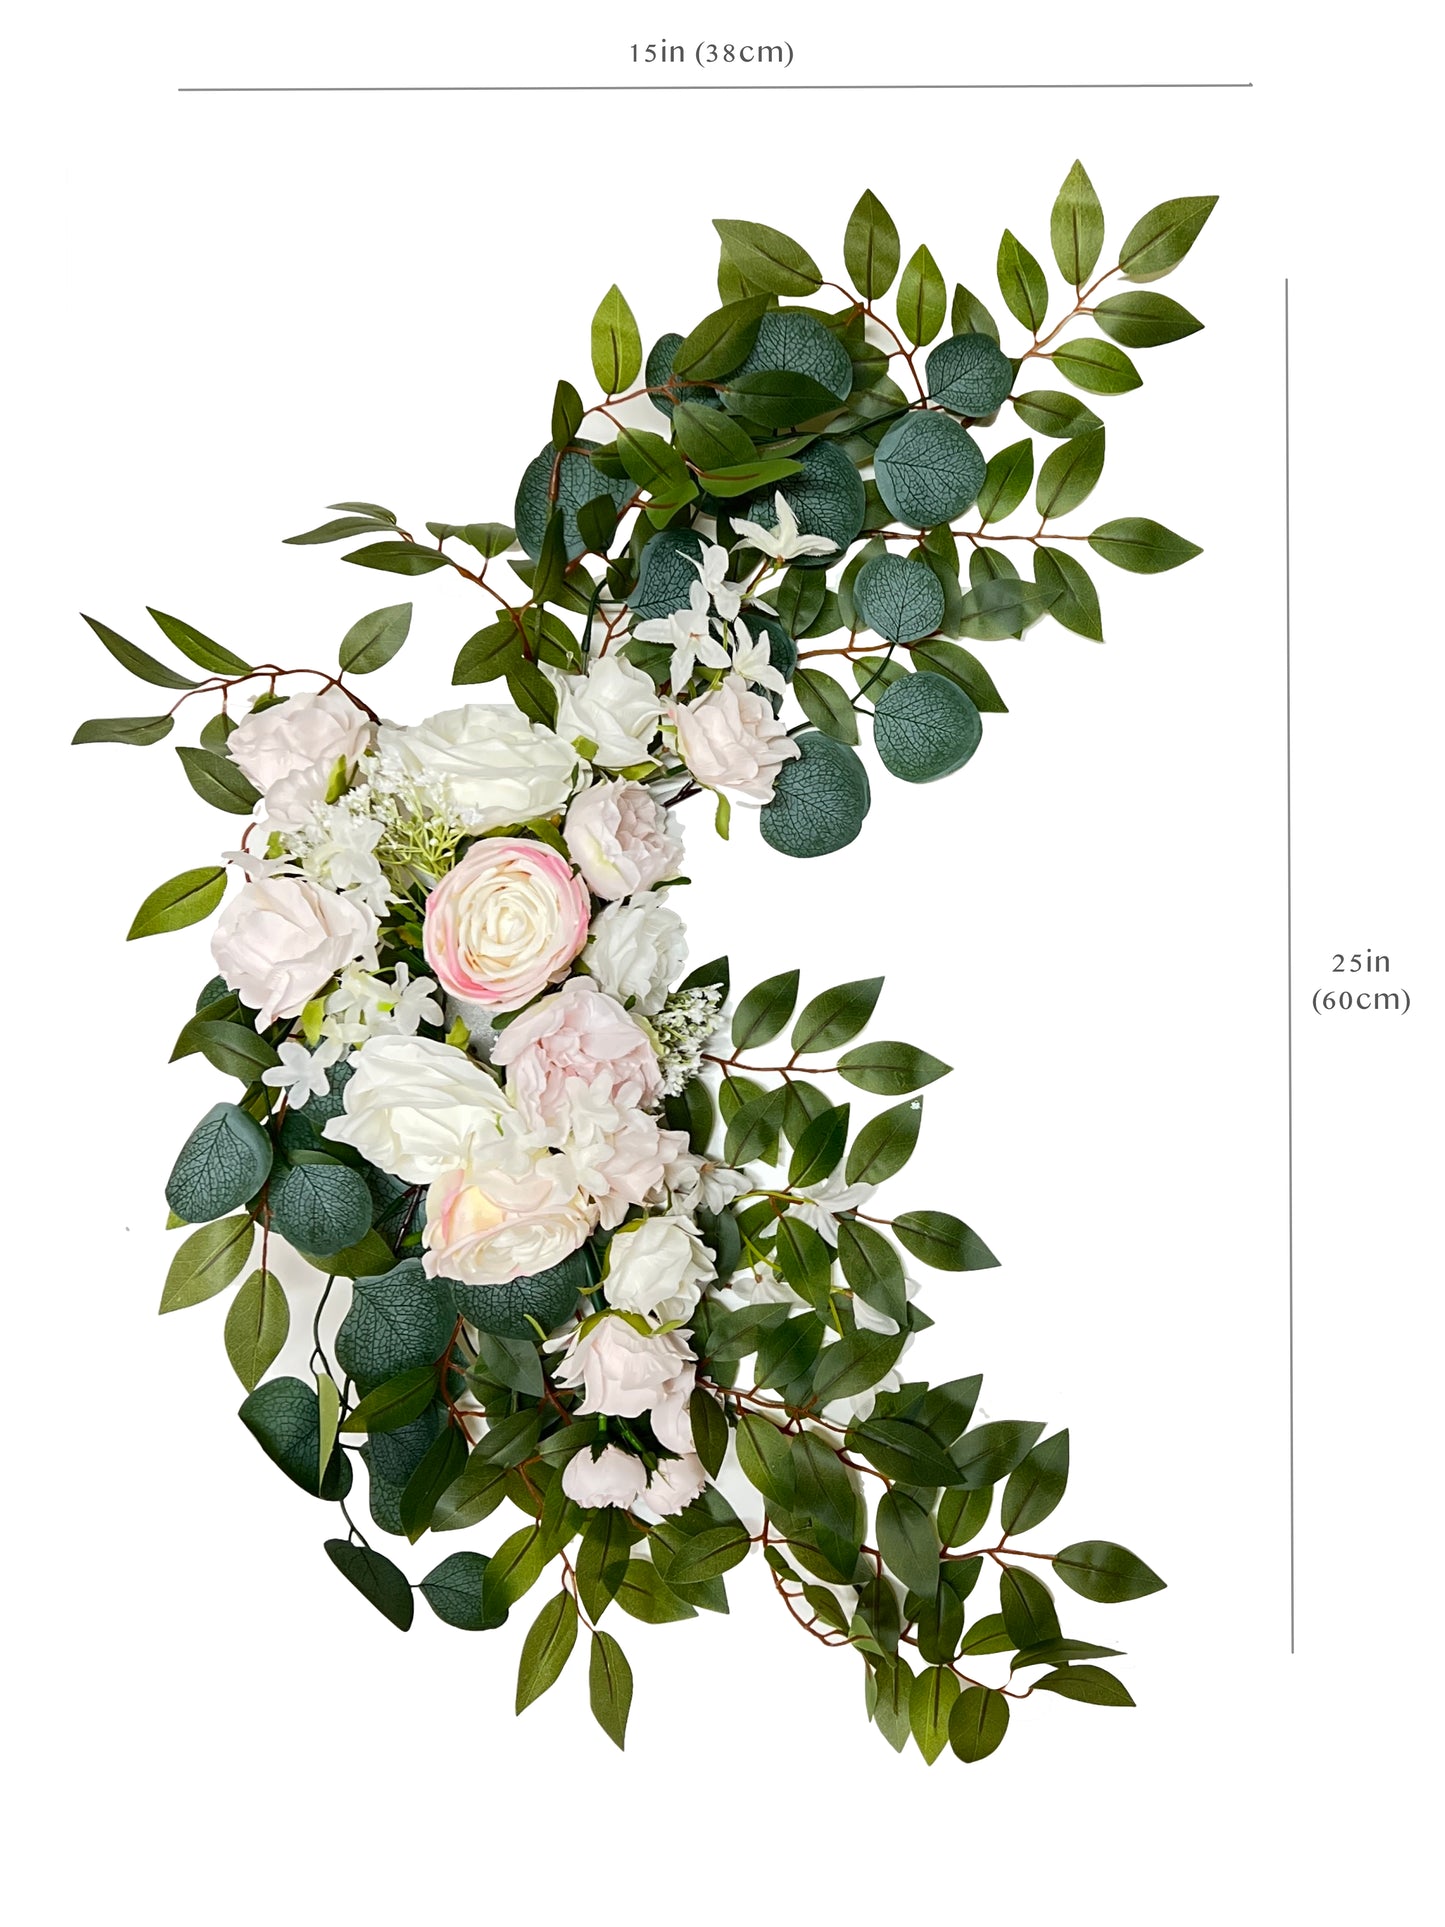 Artificial Rose Wedding Arch Decor Set - Lifelike Elegance for a Romantic Atmosphere